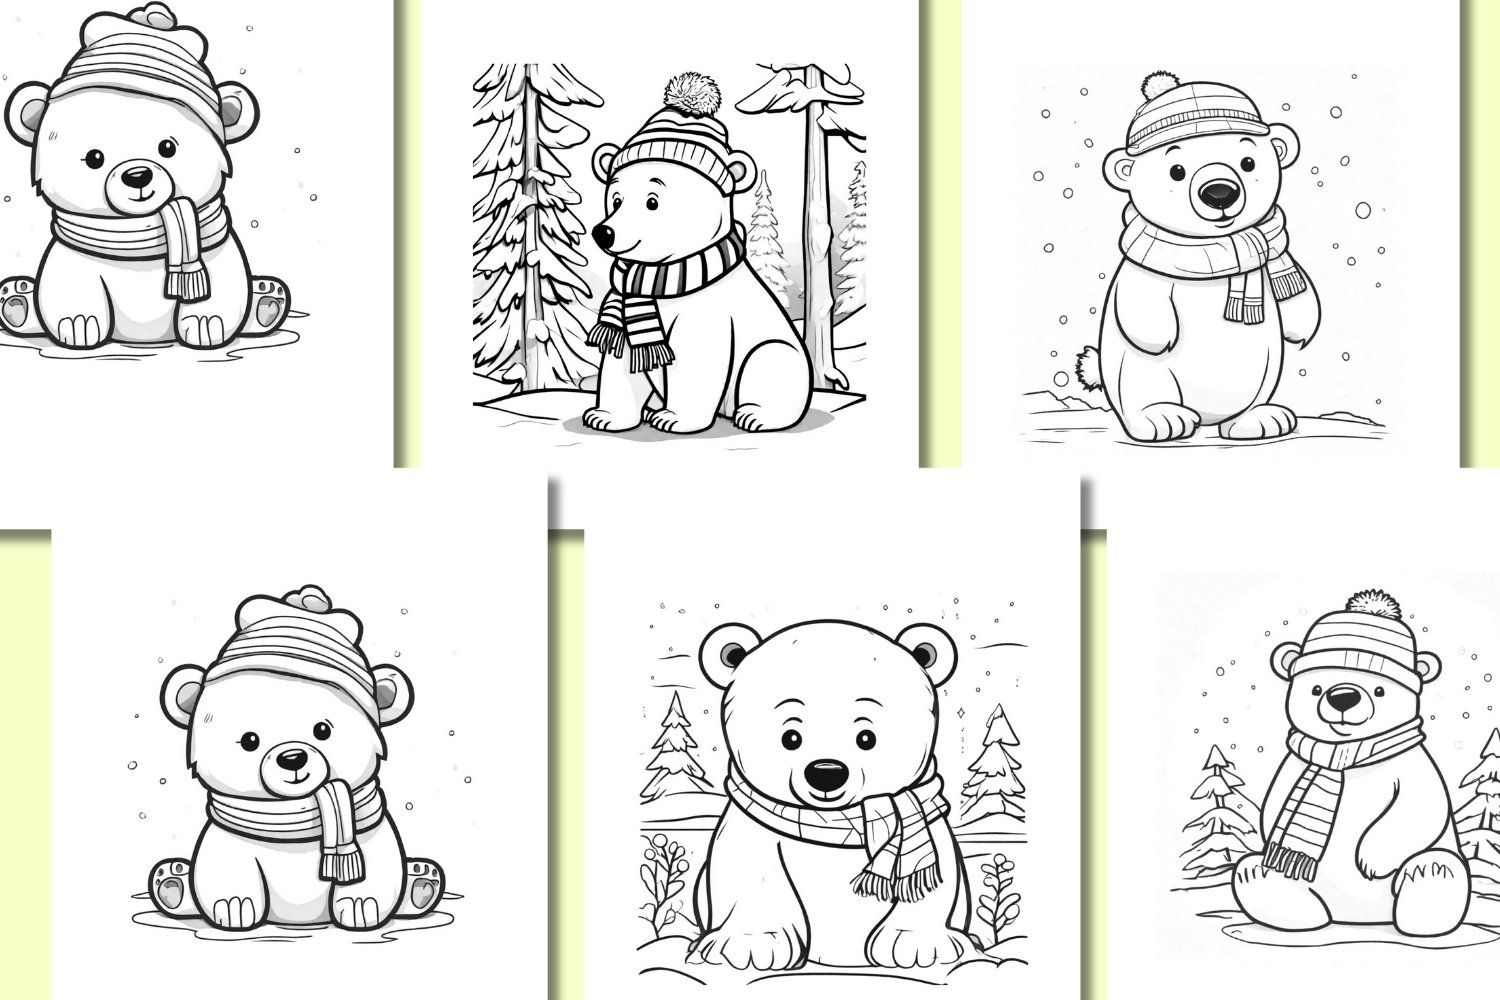 Polar bear coloring book for kids